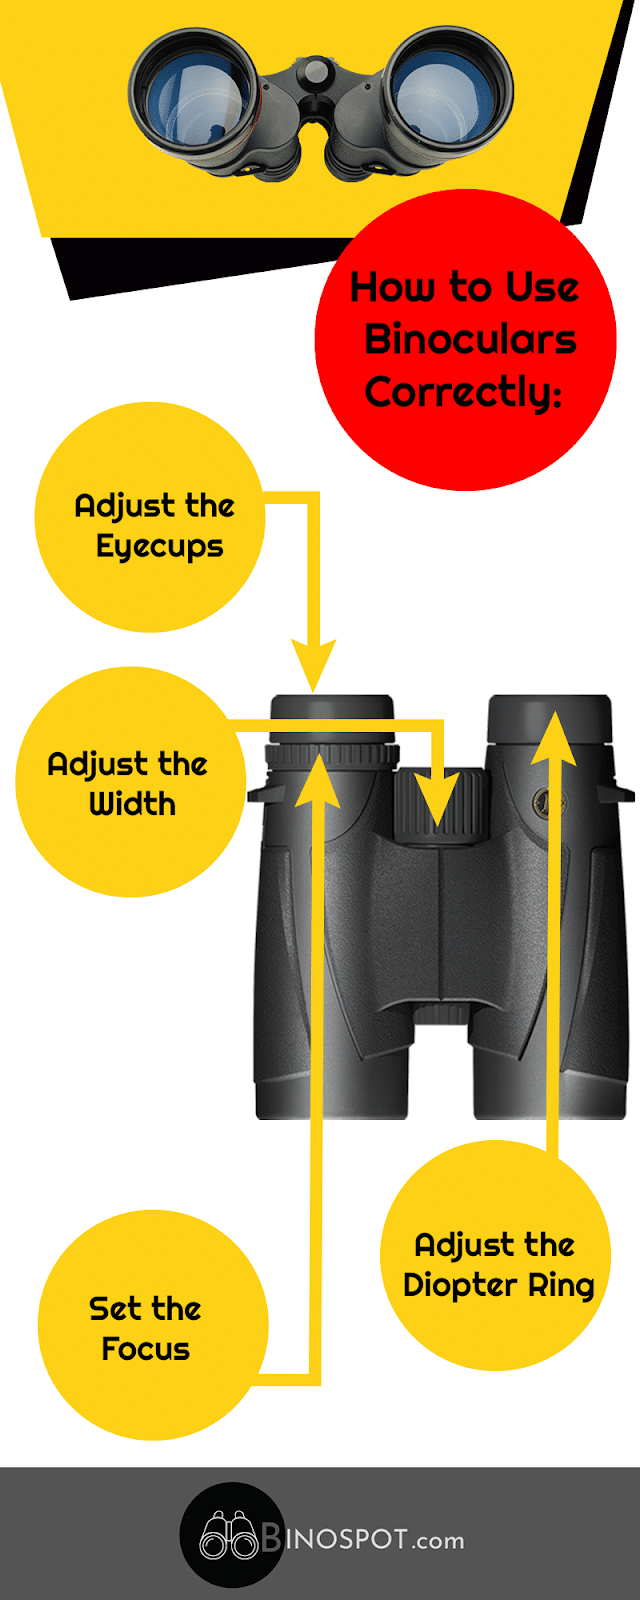 How Do Binoculars Work? infographic